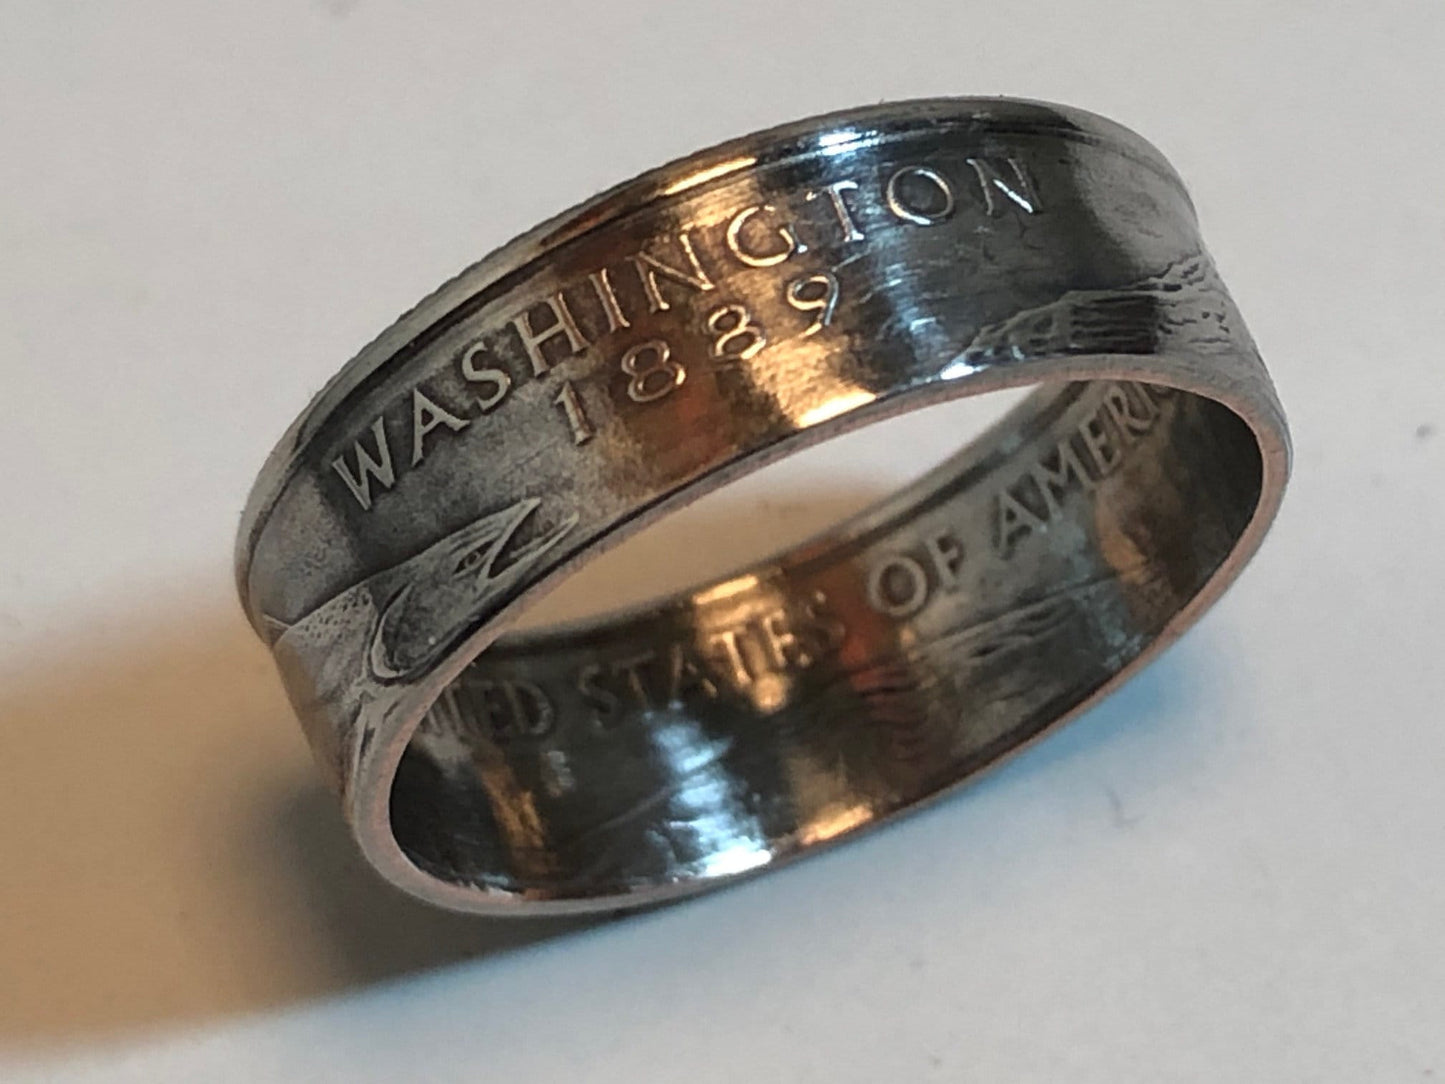 Washington Ring USA United States State Quarter Coin Ring